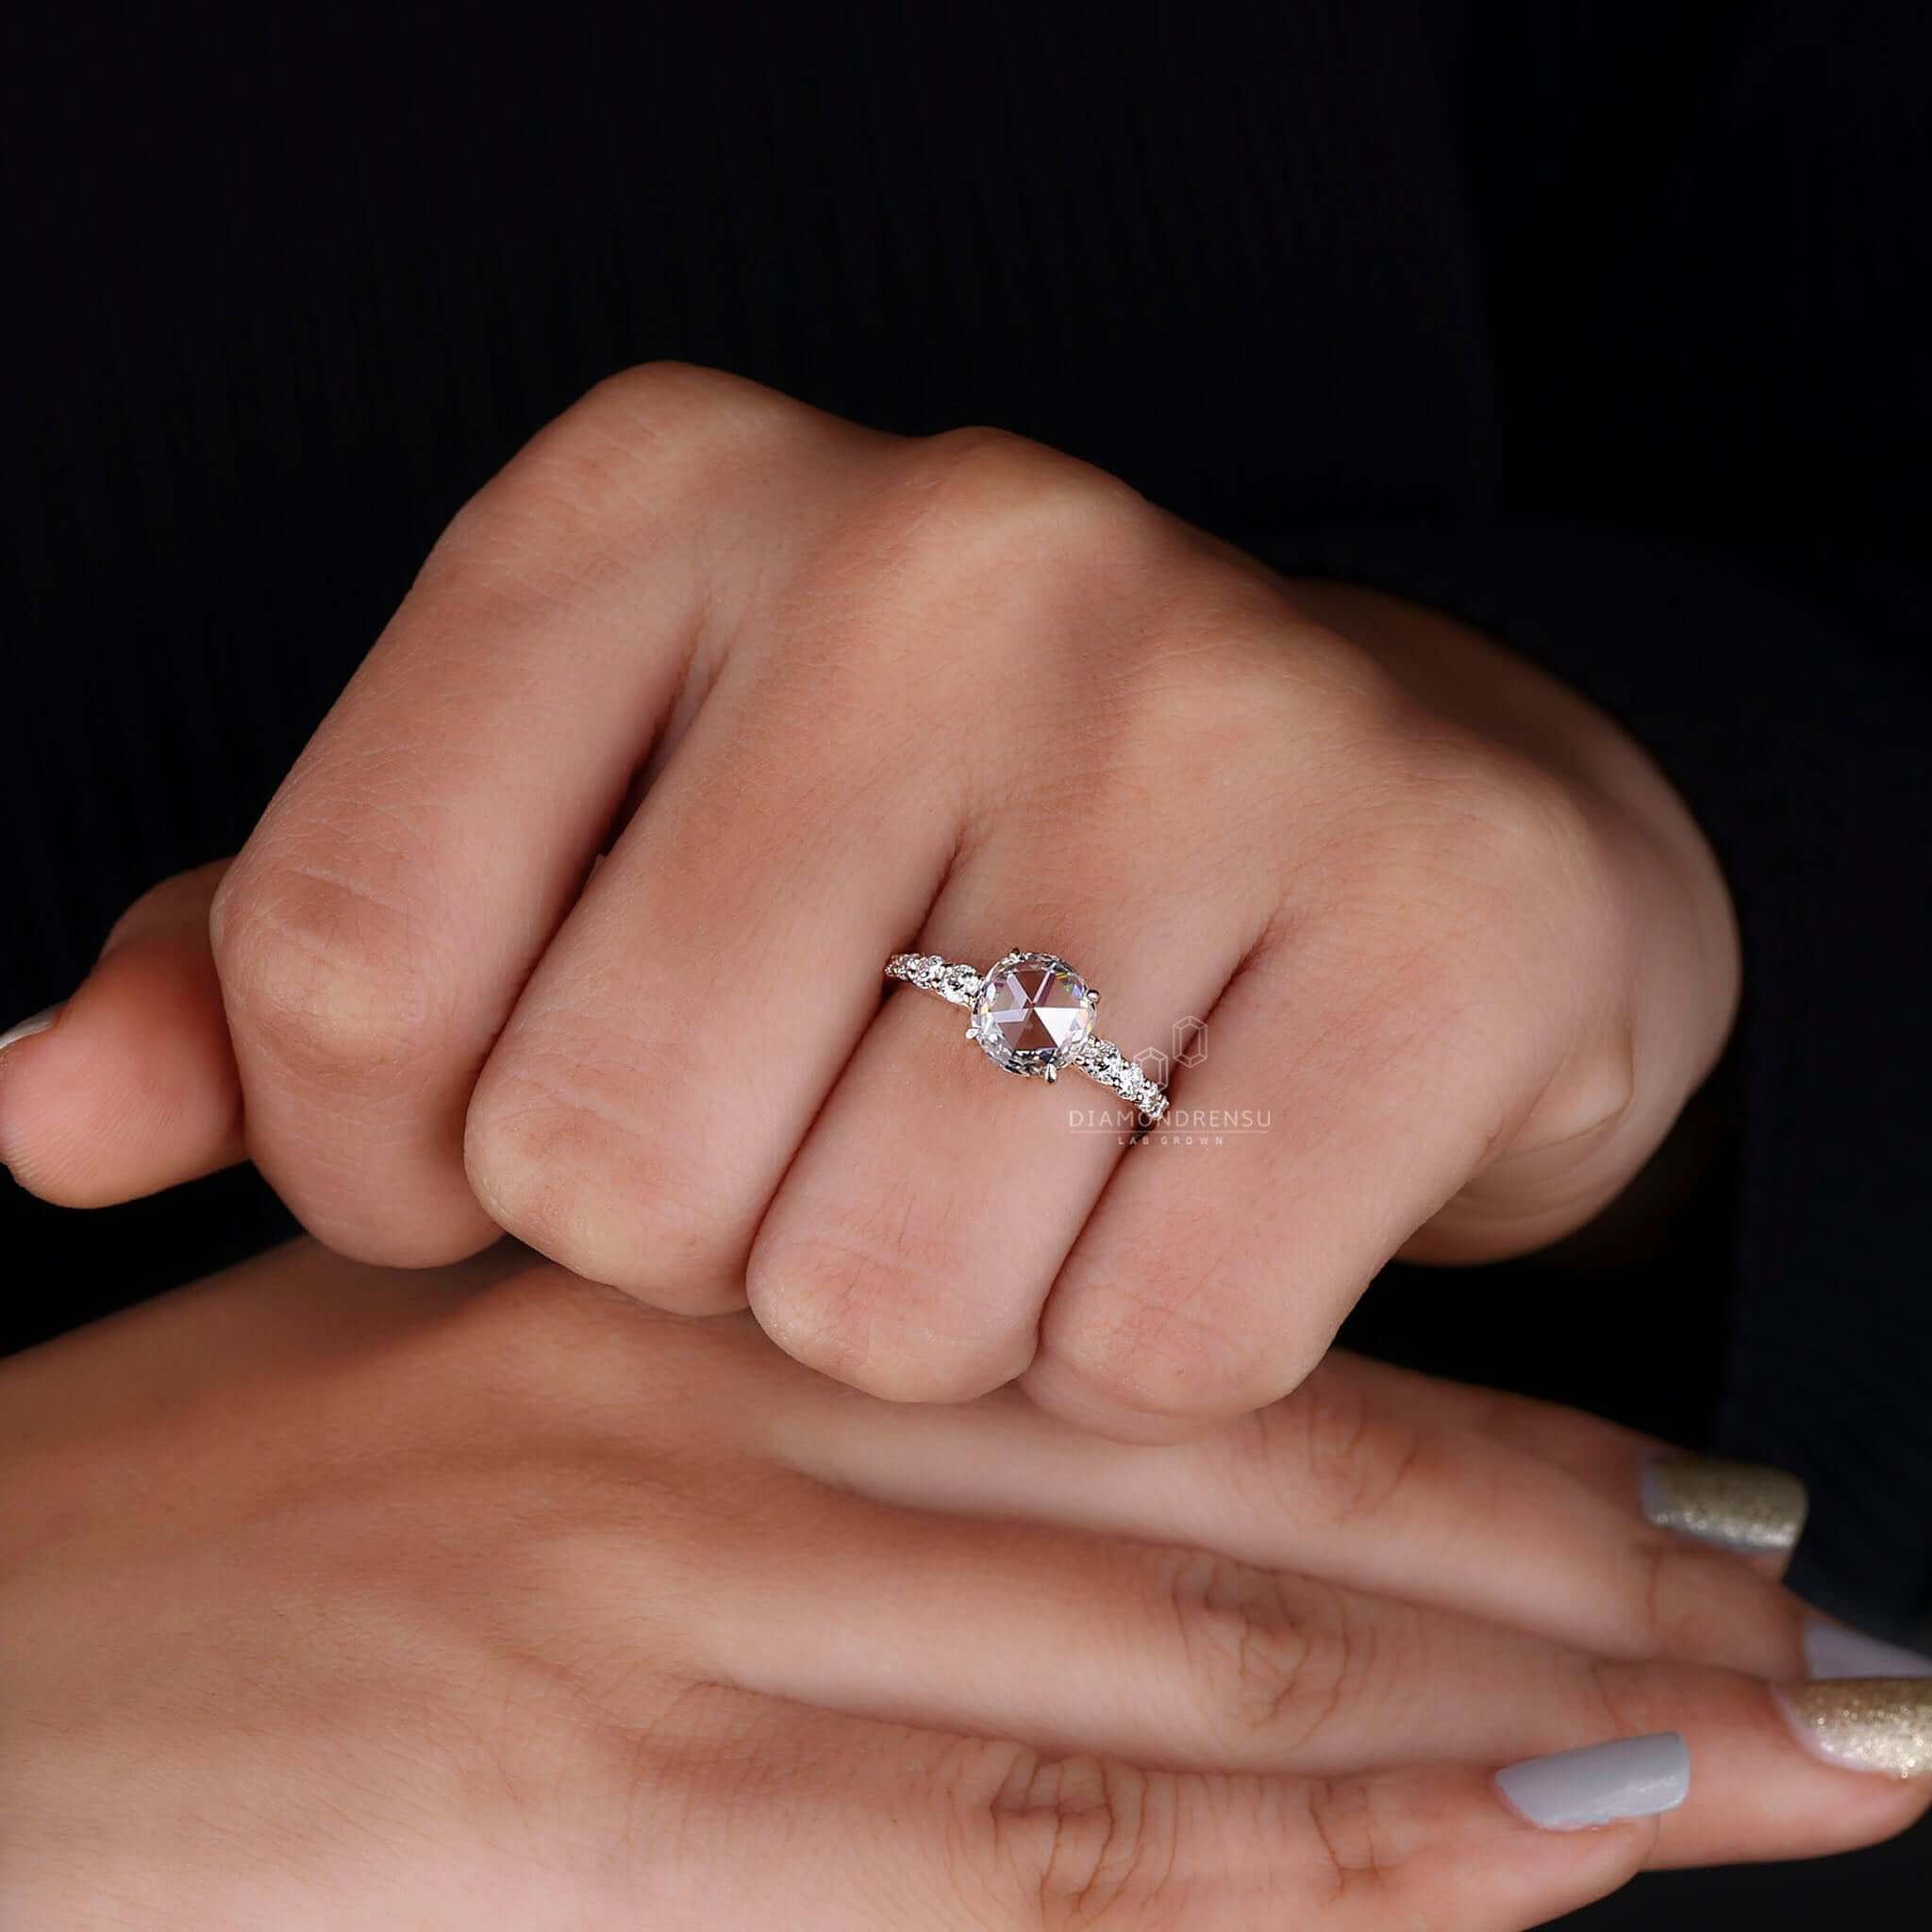 lab grown diamond wedding ring